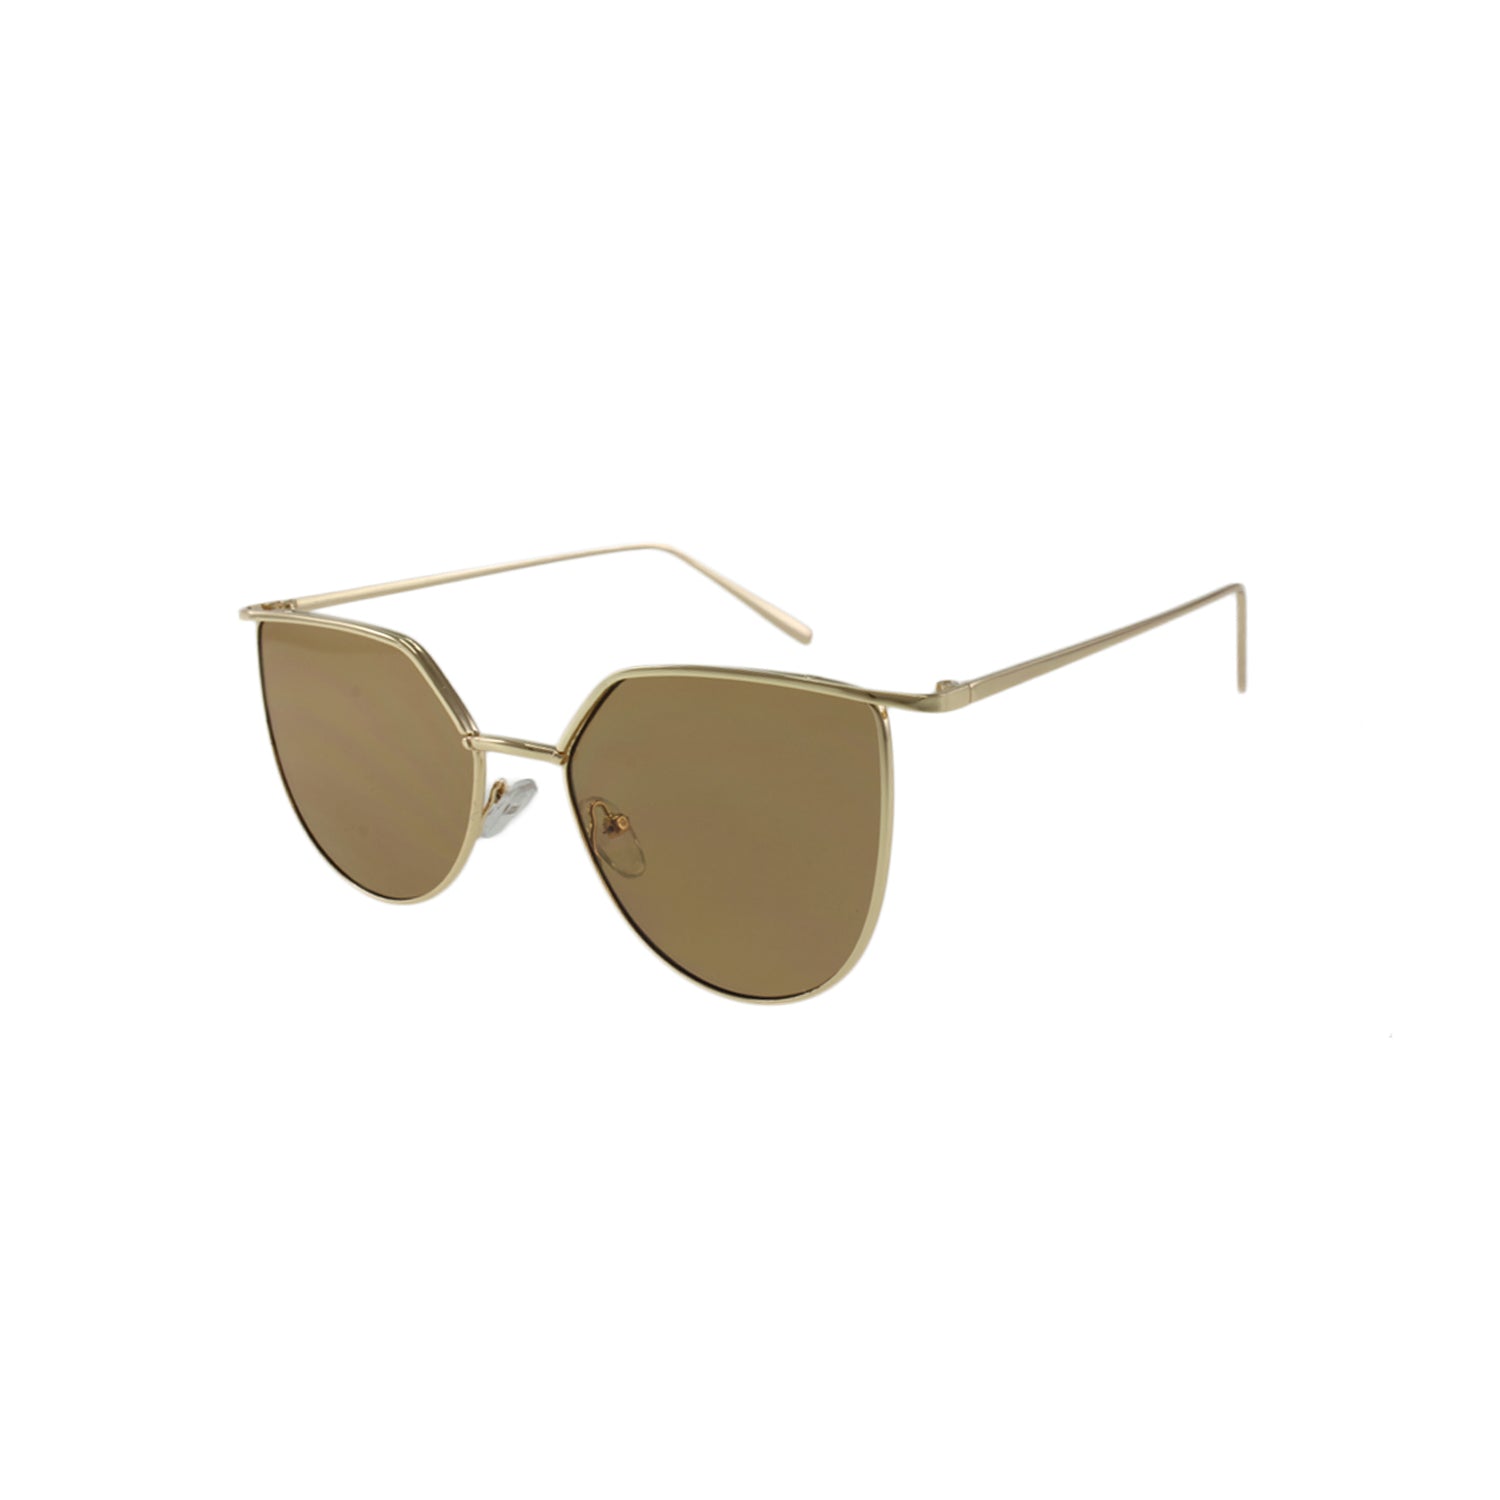 Jase New York Alton Sunglasses - Shop Luxurious57